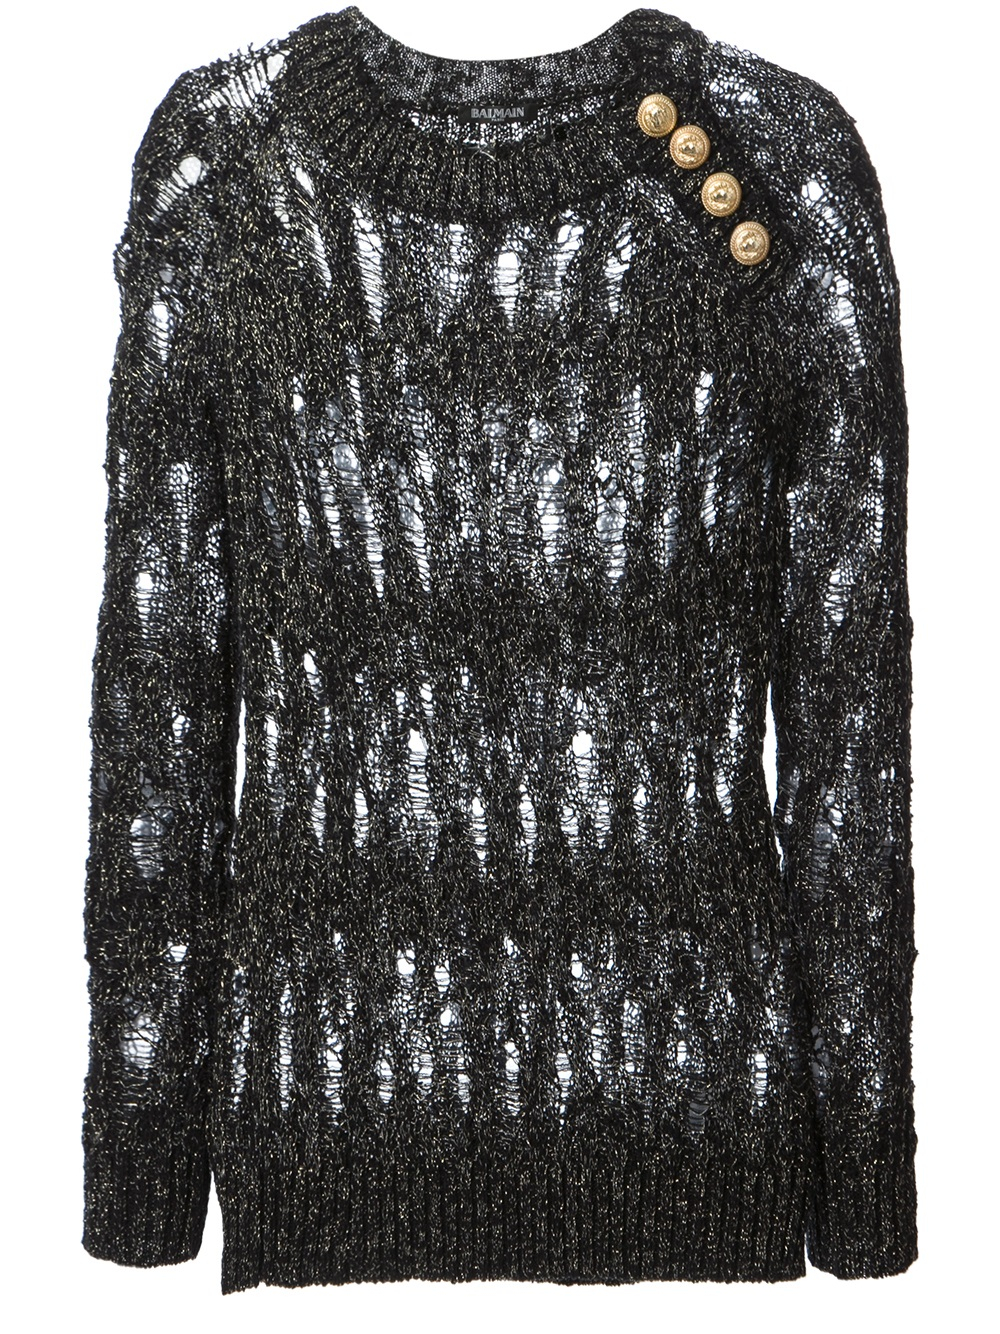 Balmain Distressed Knit Sweater in Black | Lyst